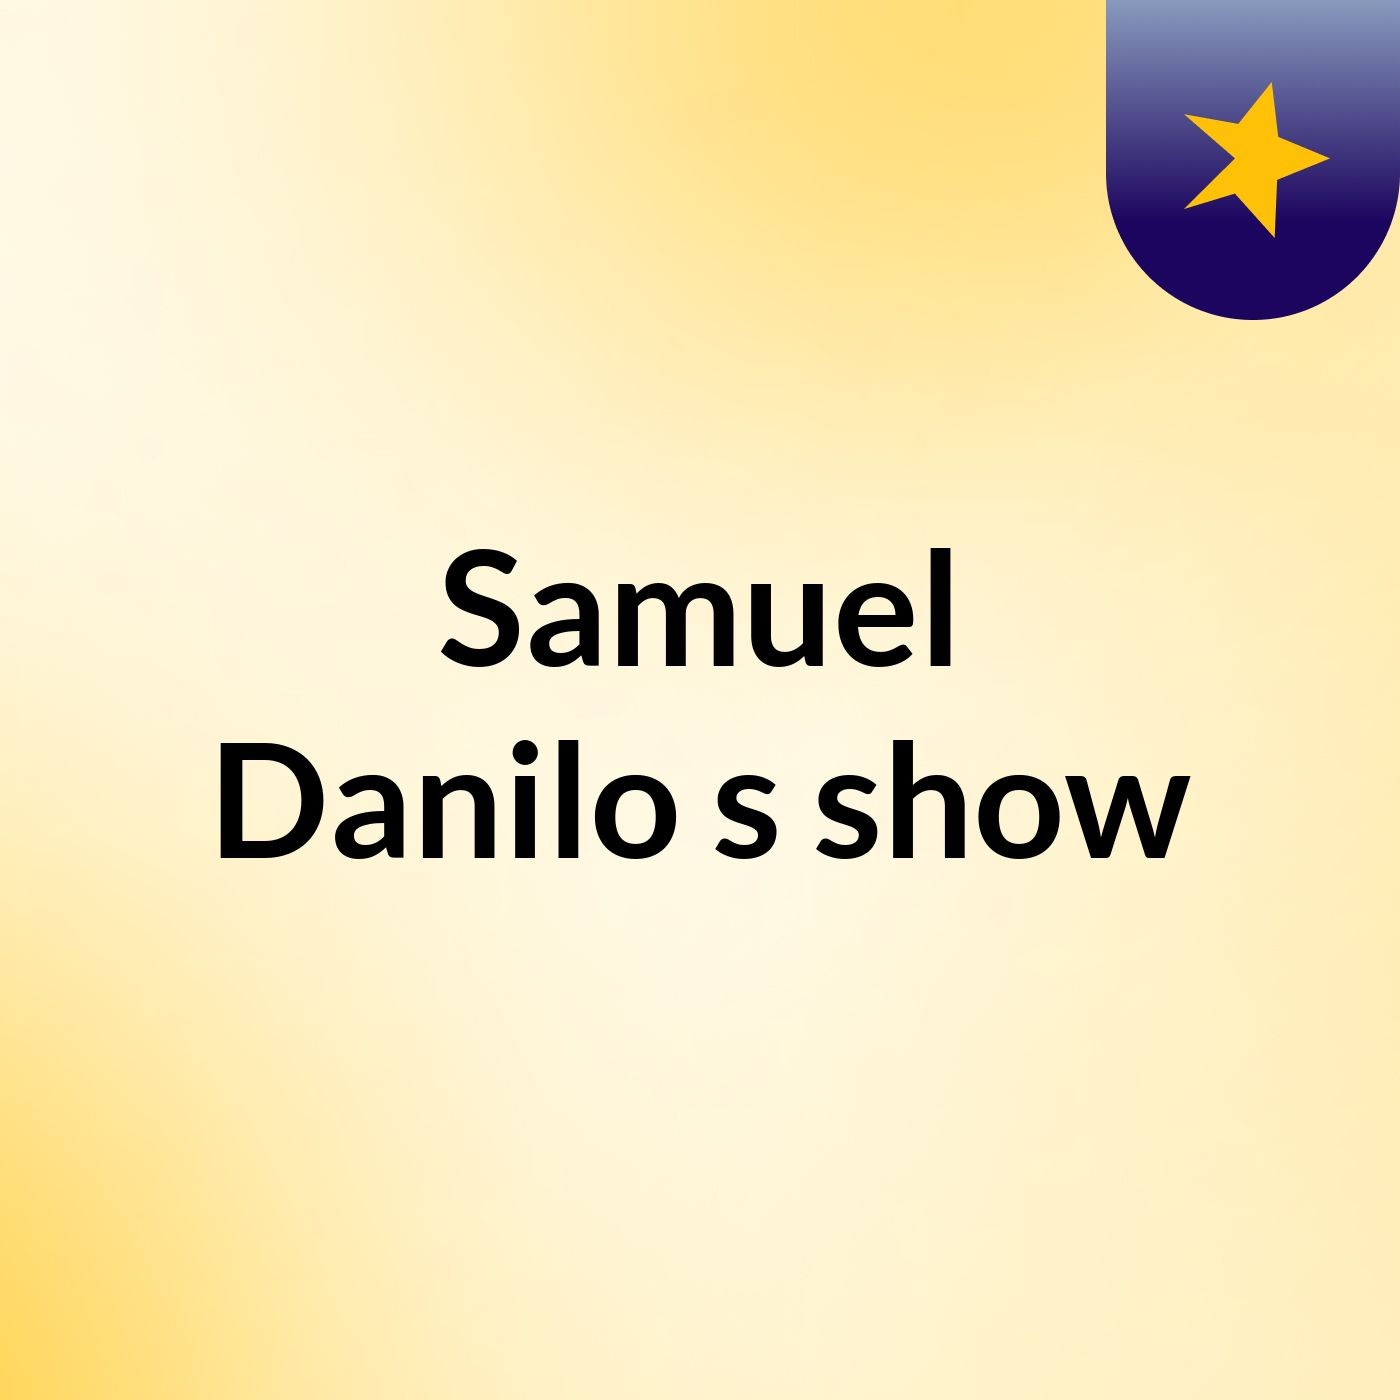 Samuel Danilo's show